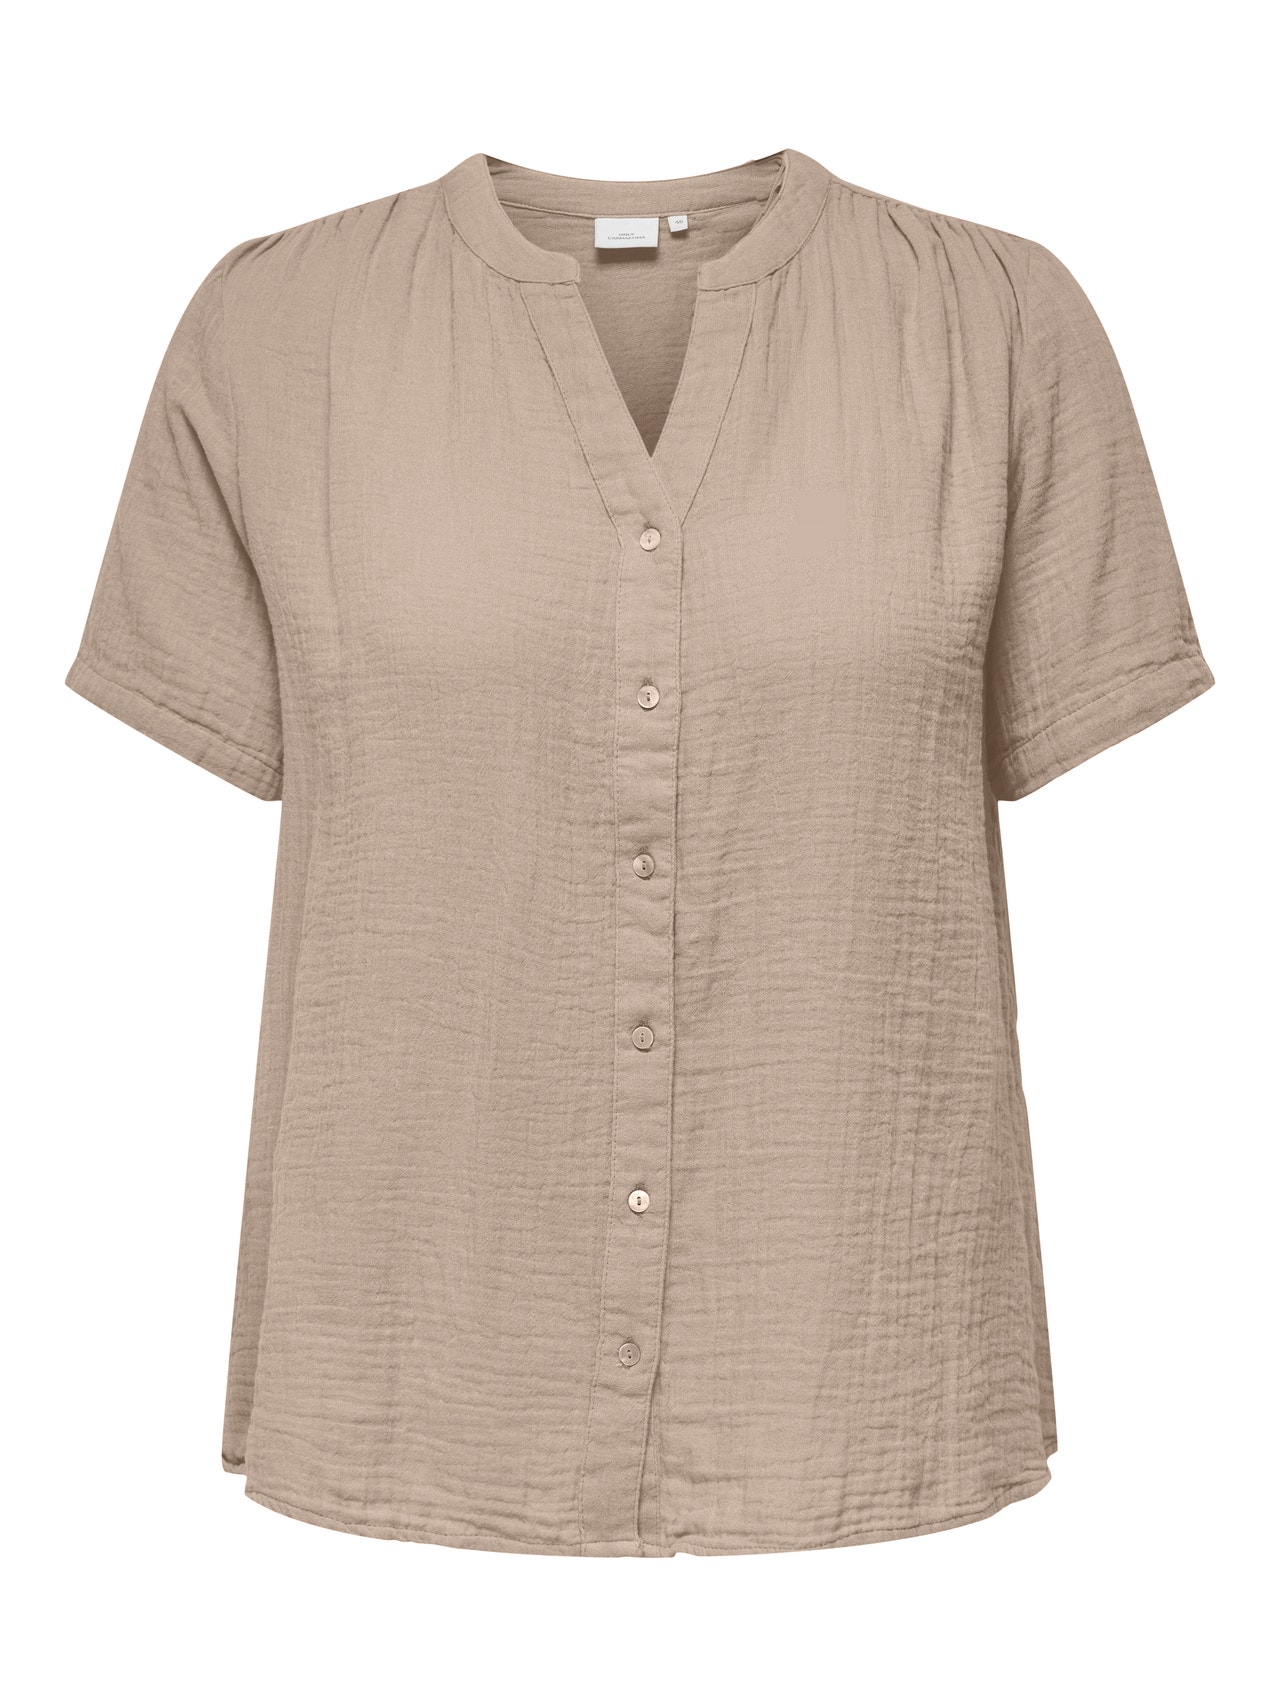 ONLY Short sleeved v-neck shirt -Oxford Tan - 15320513